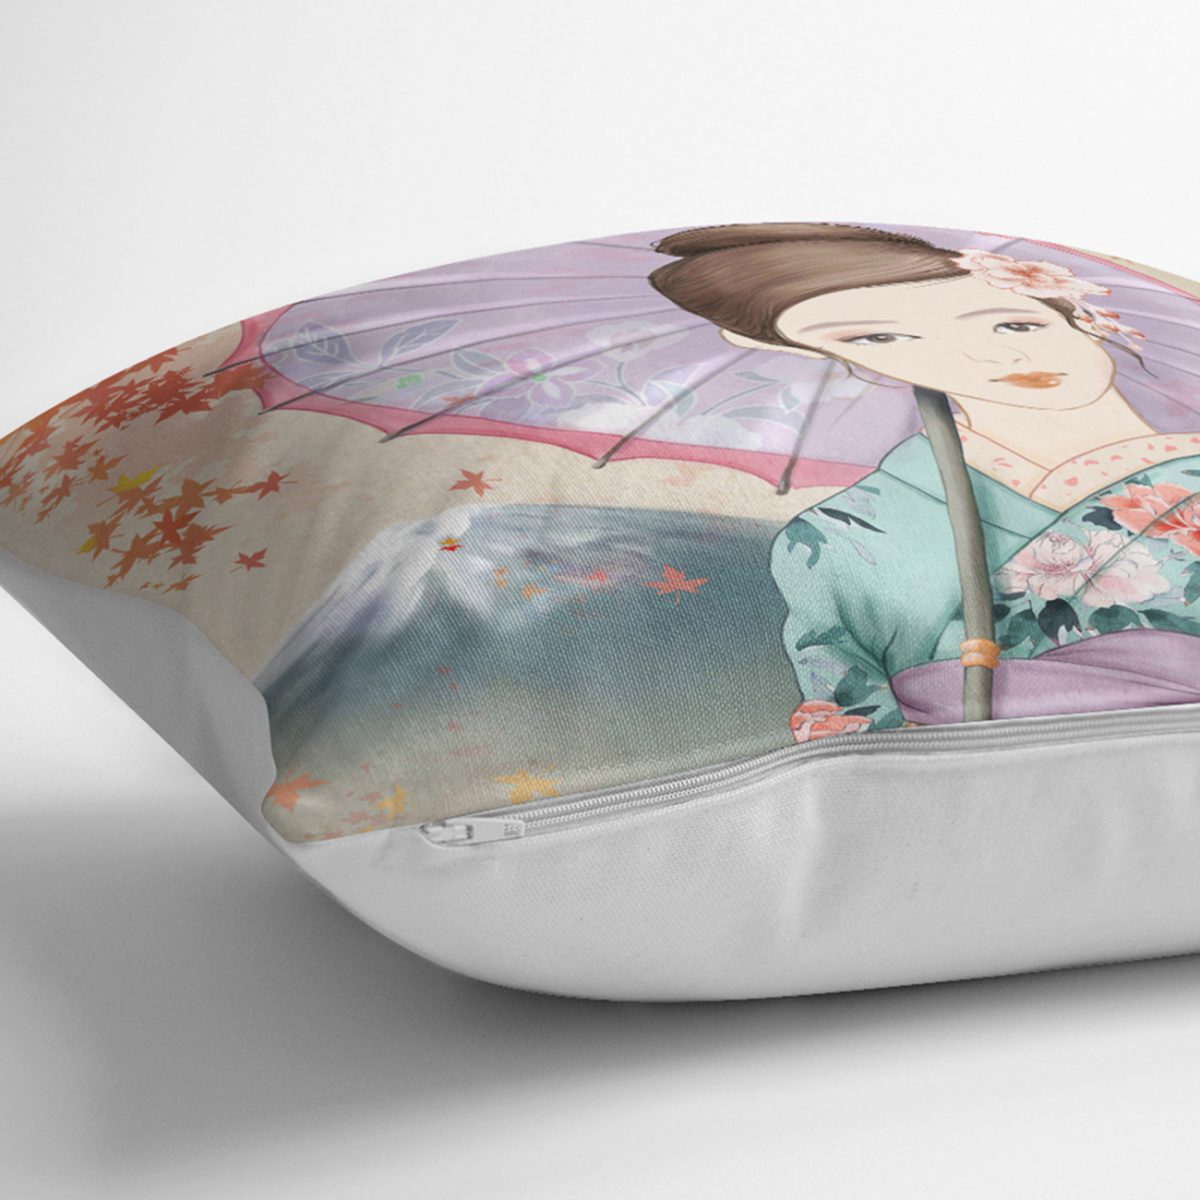 Şemsiyeli Japon Kız Motifli Dekoratif Kırlent Kılıfı Realhomes